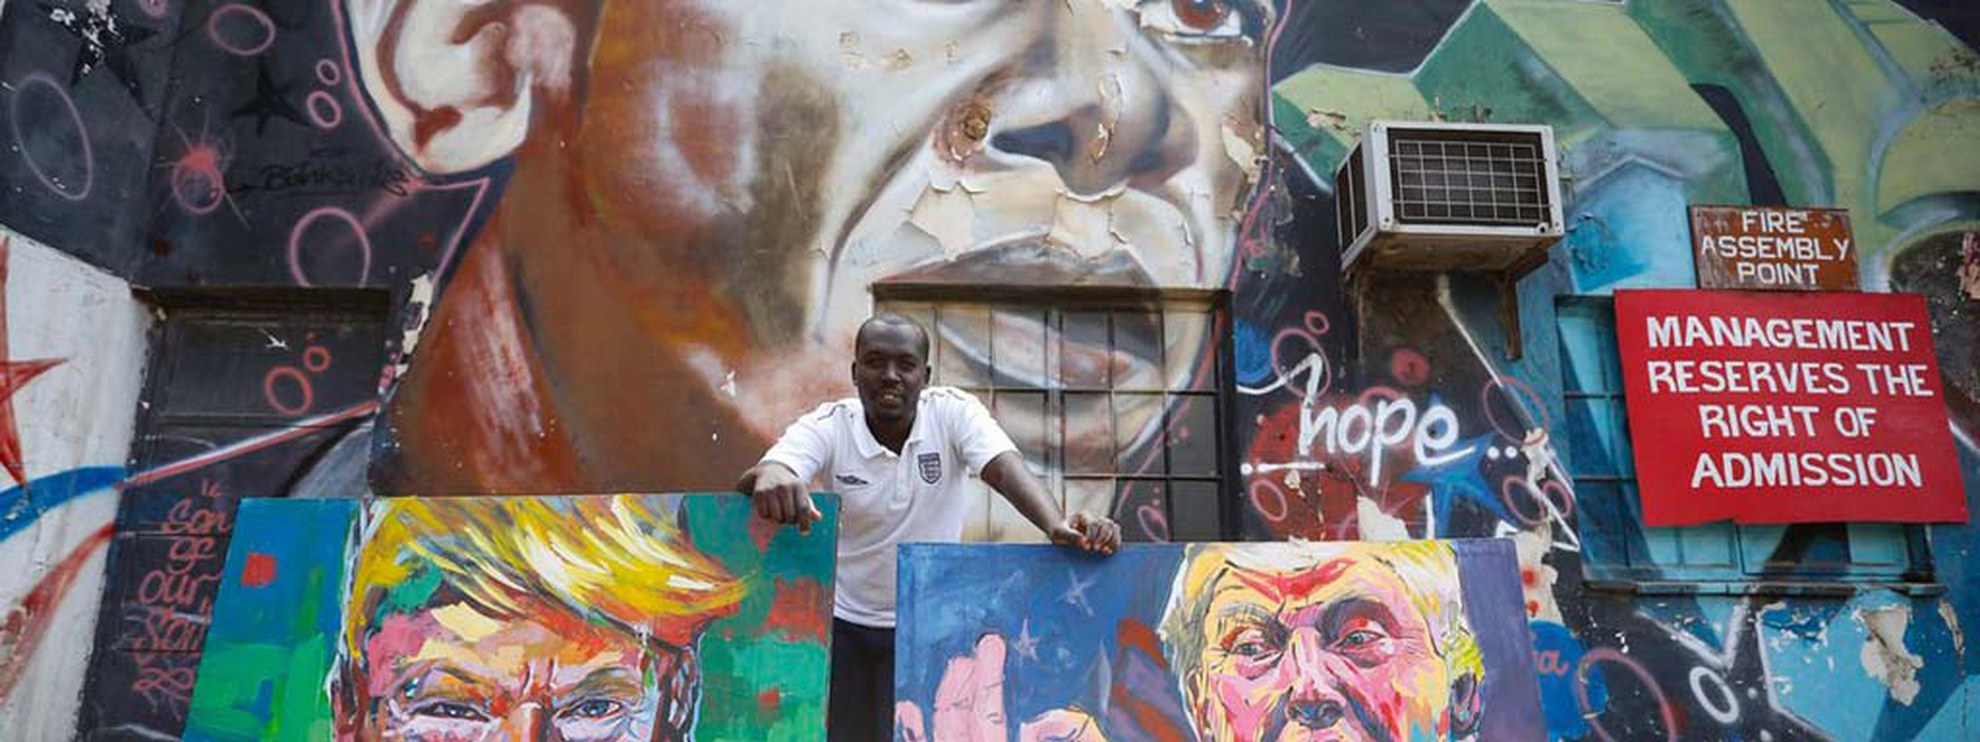 L’artiste kenyan Yegonizer et ses portraits de Donald Trump, devant une oeuvre murale de Bankslave représentant Obama. © Keystone/EPA/DAI KUROKAWA